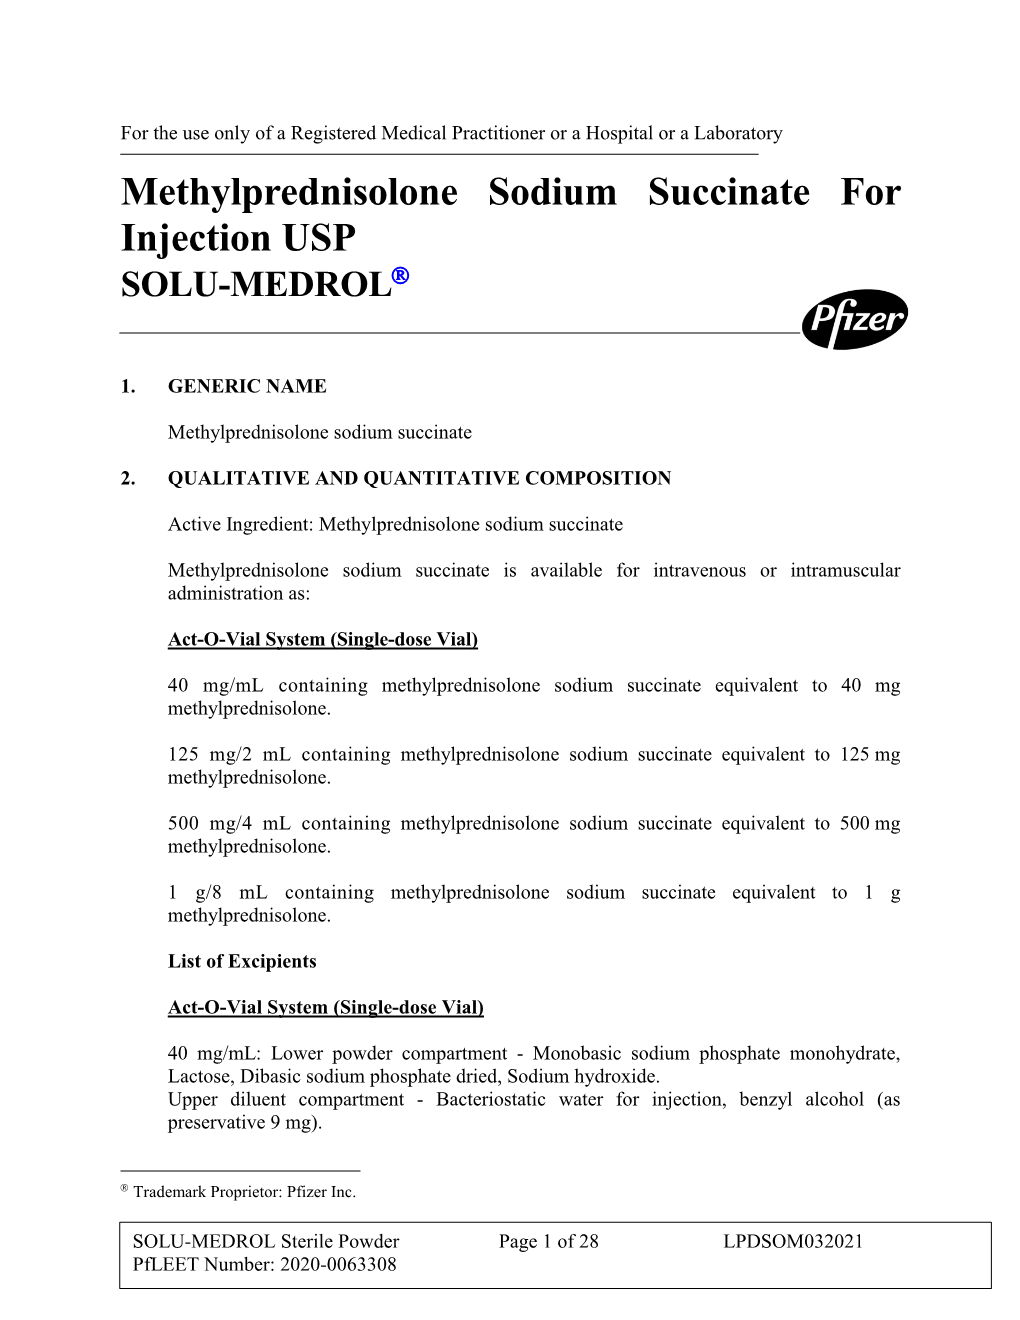 Methylprednisolone Sodium Succinate for Injection USP SOLU-MEDROL